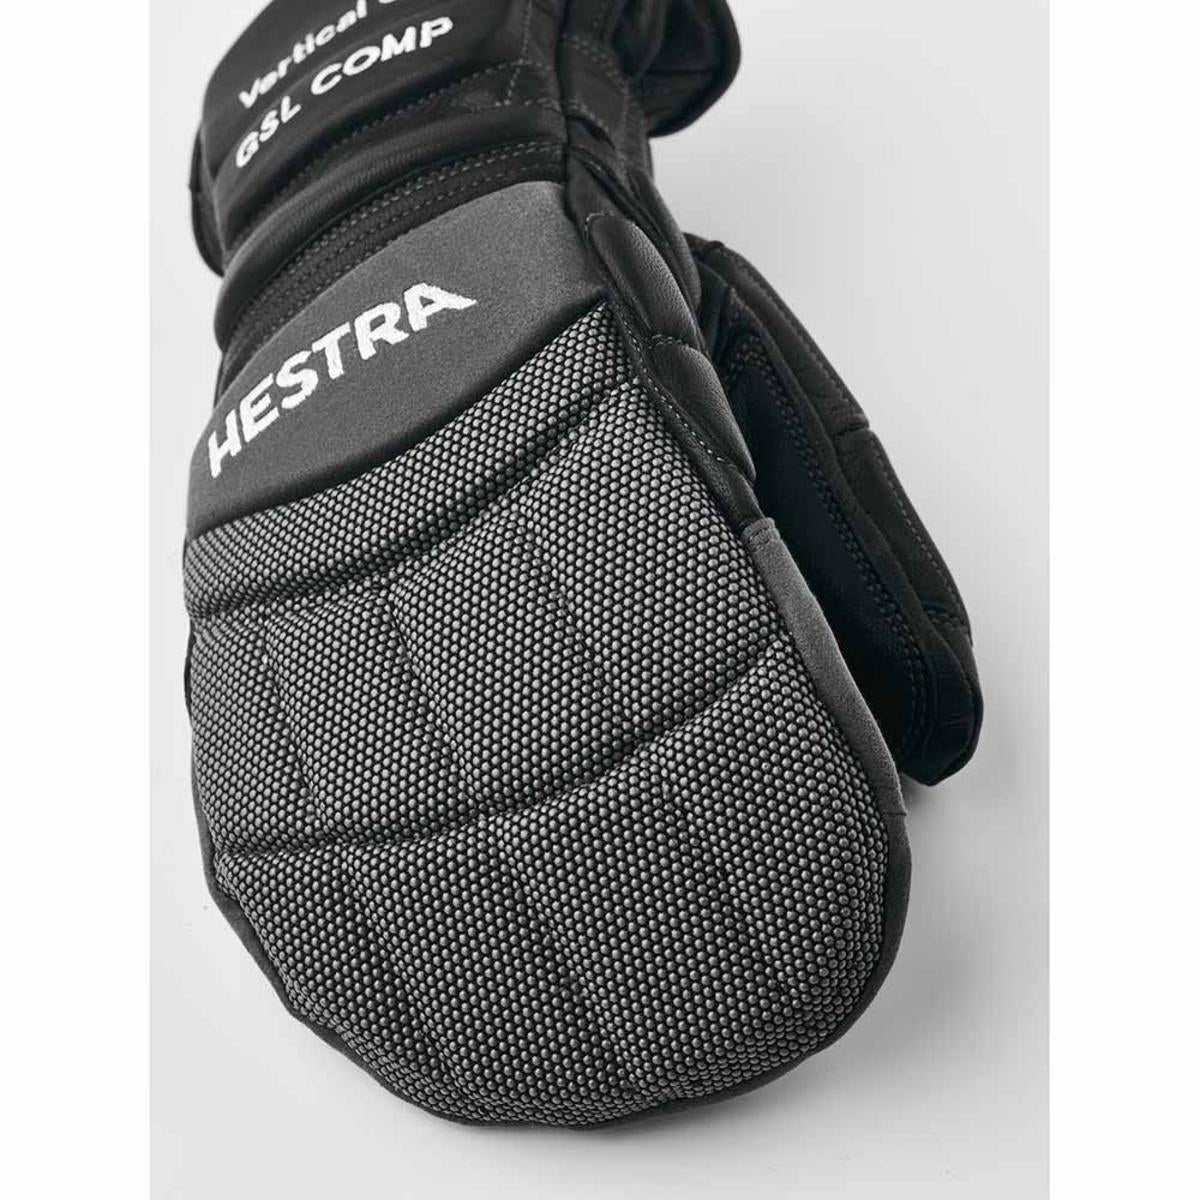 Hestra Unisex GSL Race Comp Ski Glove Mittens